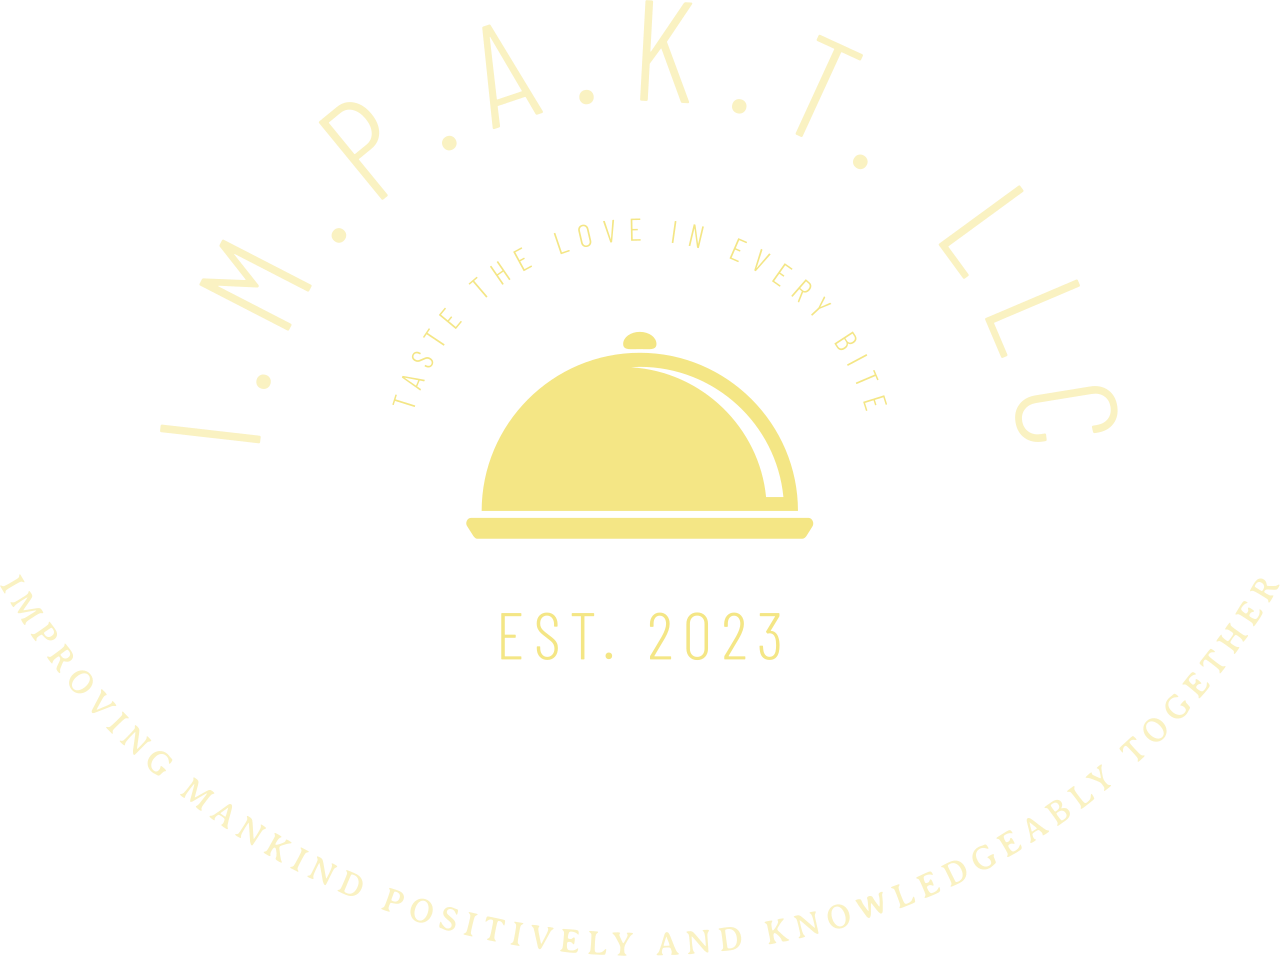 I.M.P.A.K.T. LLC's logo